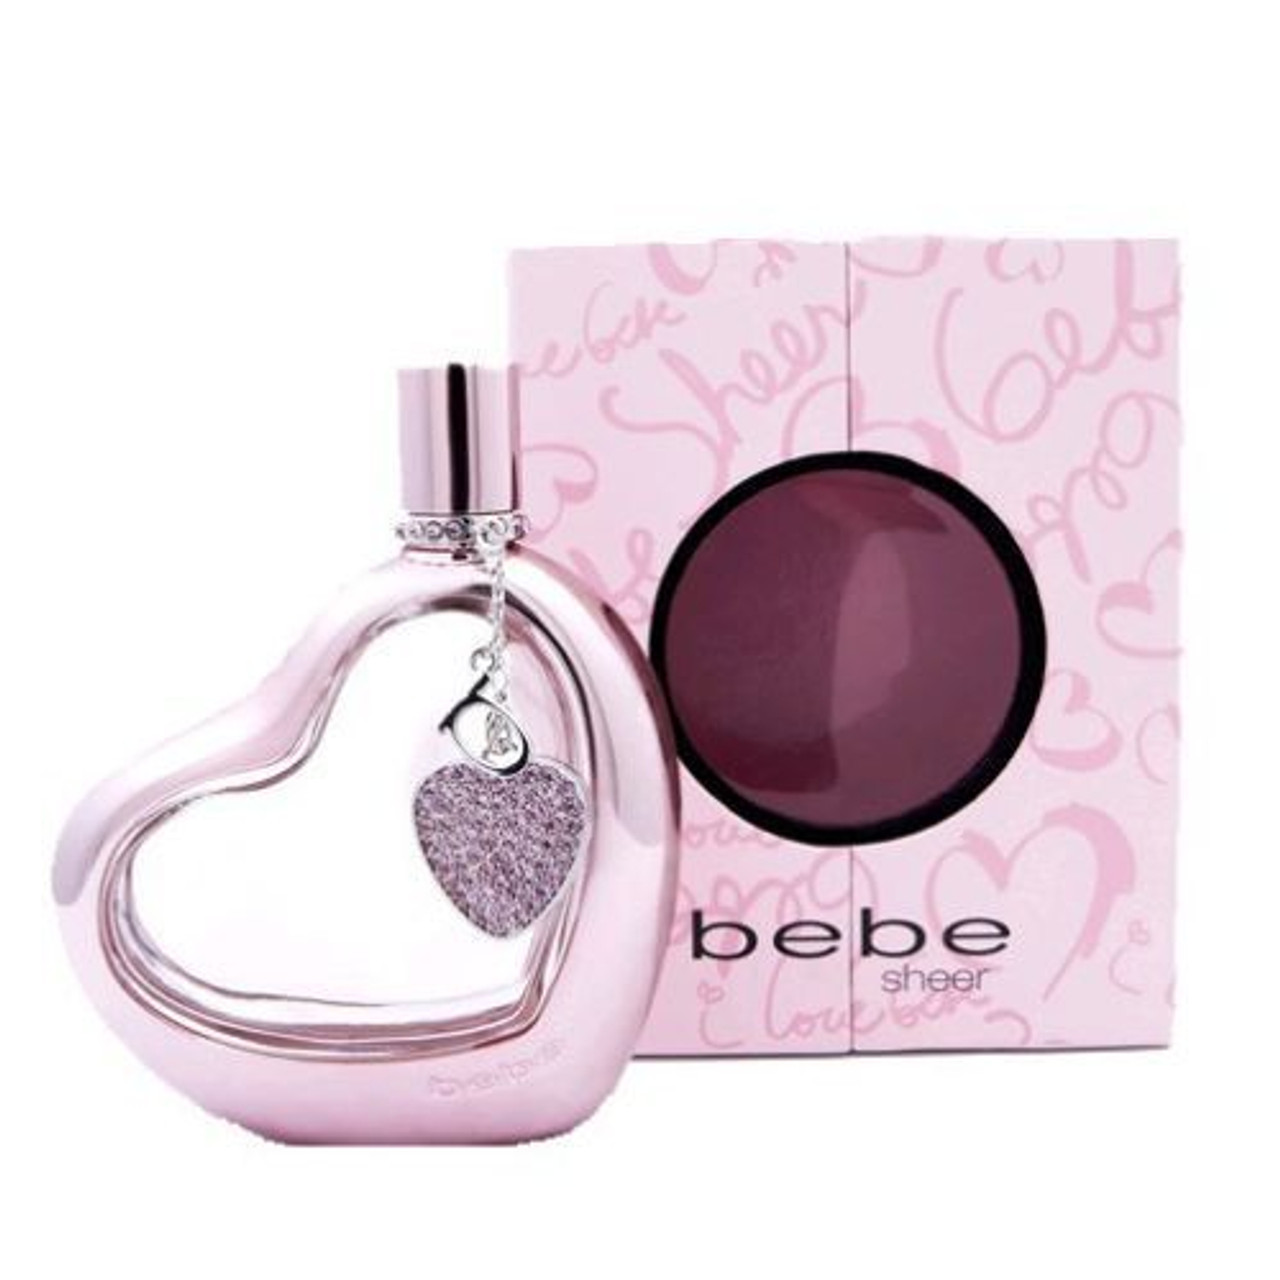 Bebe Bebe Luxe By Bebe for Women - 3.4 Oz Edp Spray, 3.4 Oz